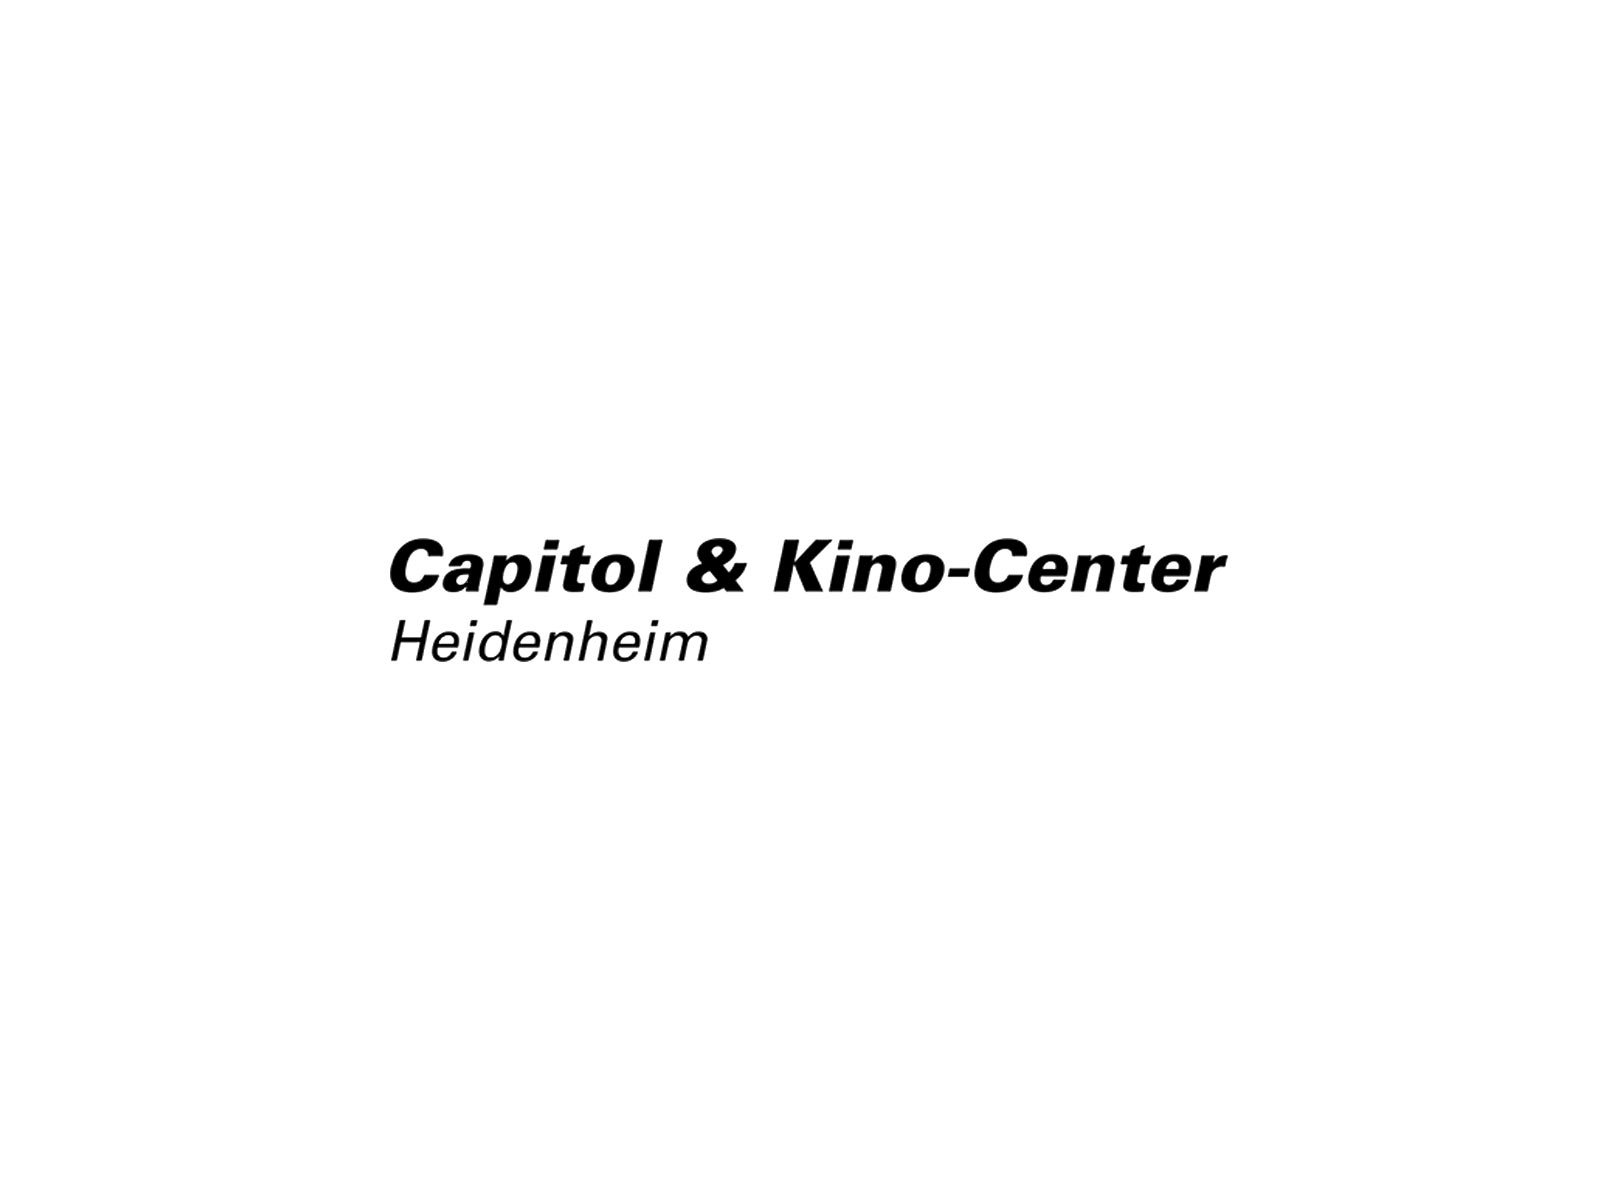 Capitol & Kino-Center Heidenheim GmbH